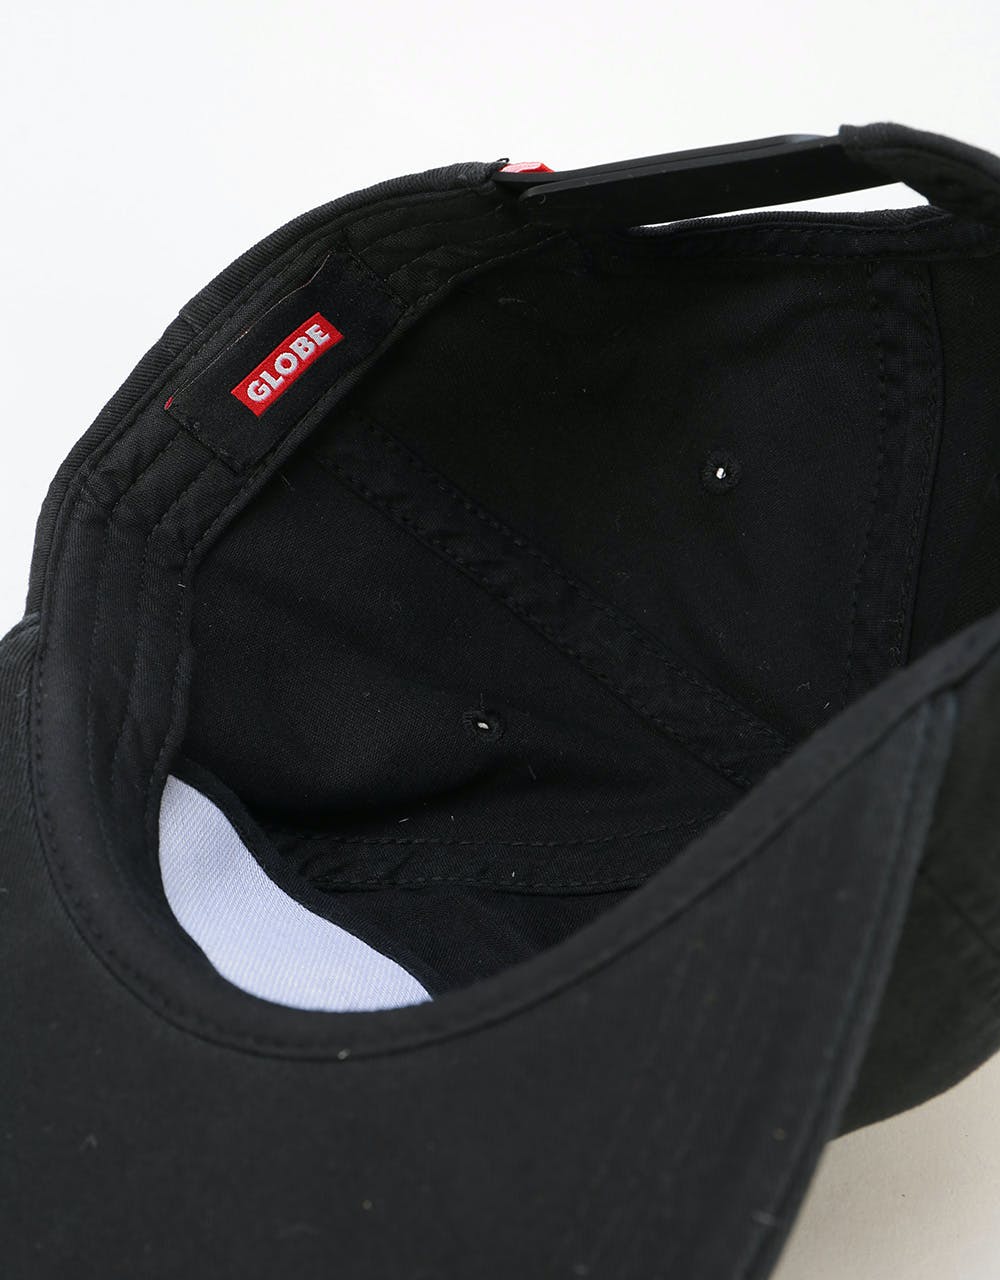 Globe Bar Snapback Cap - Black